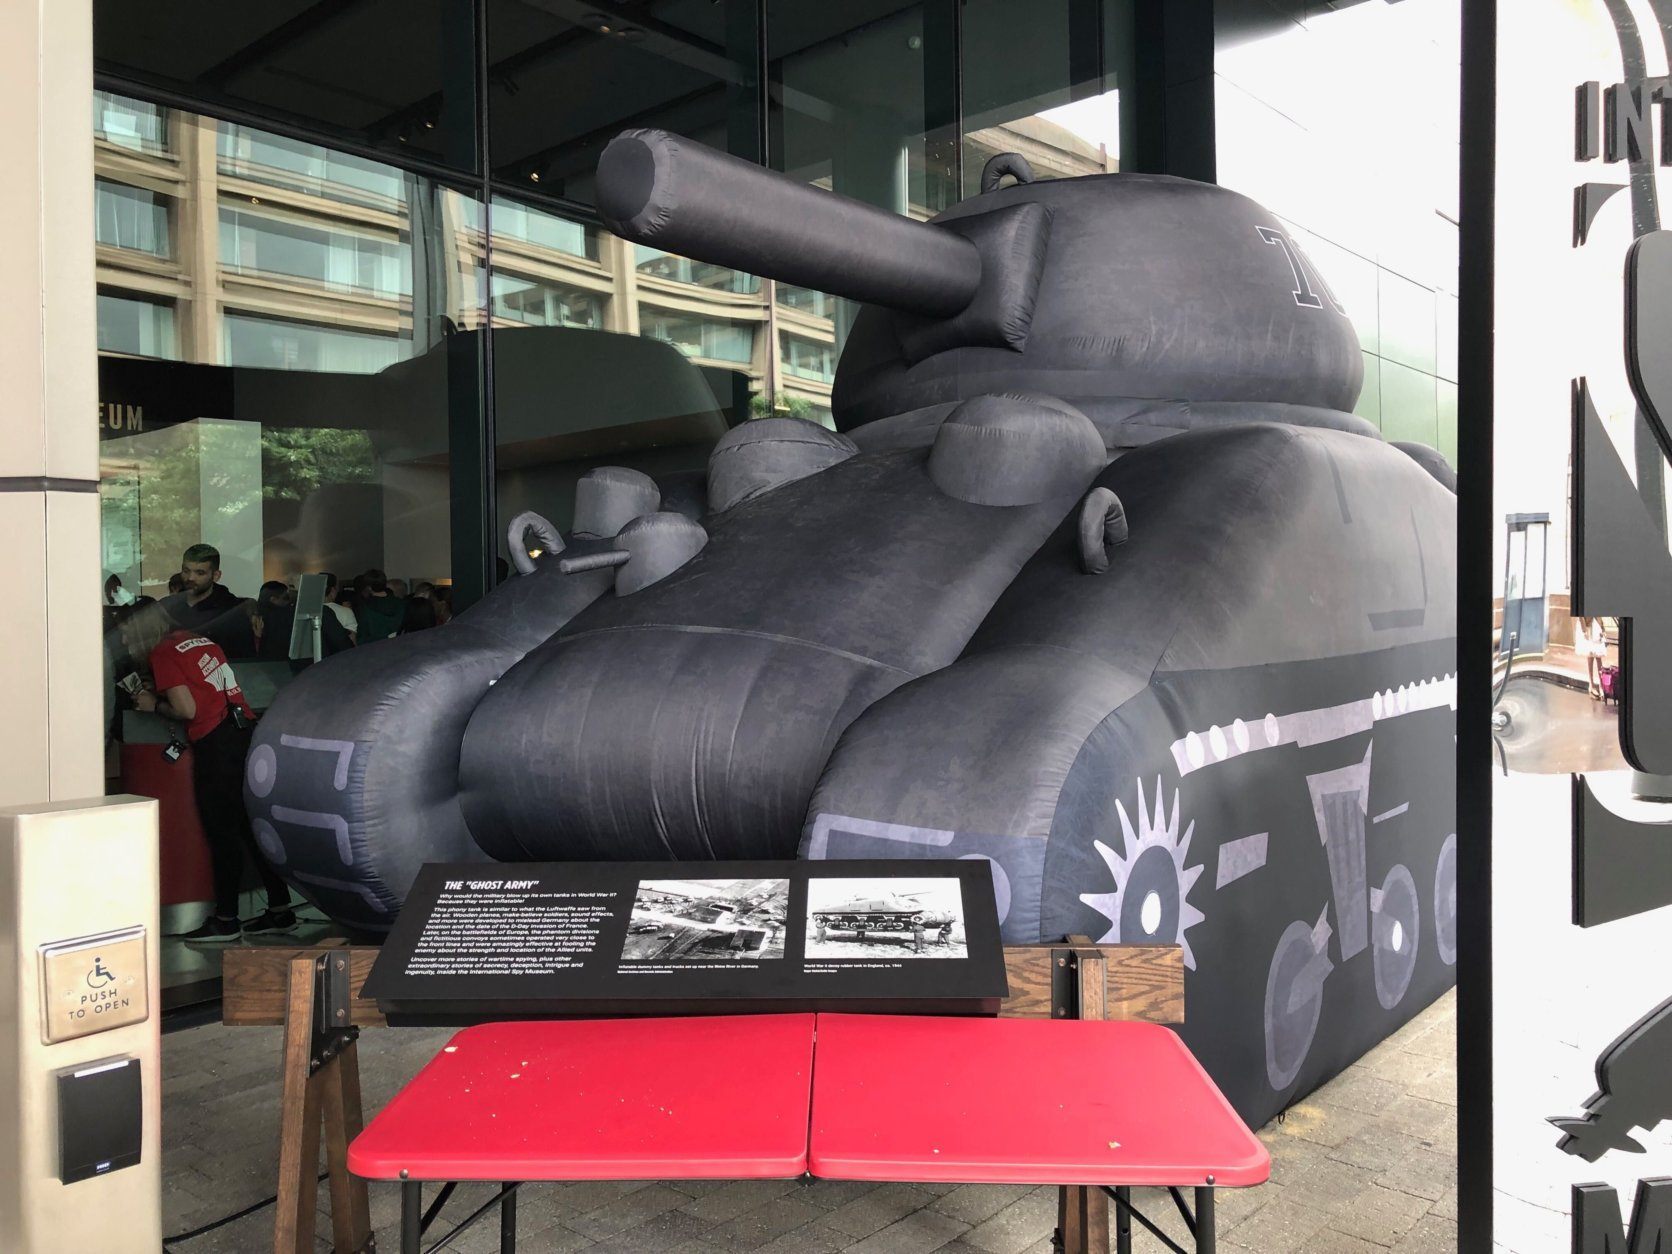 Blow-up tank International Spy Museum